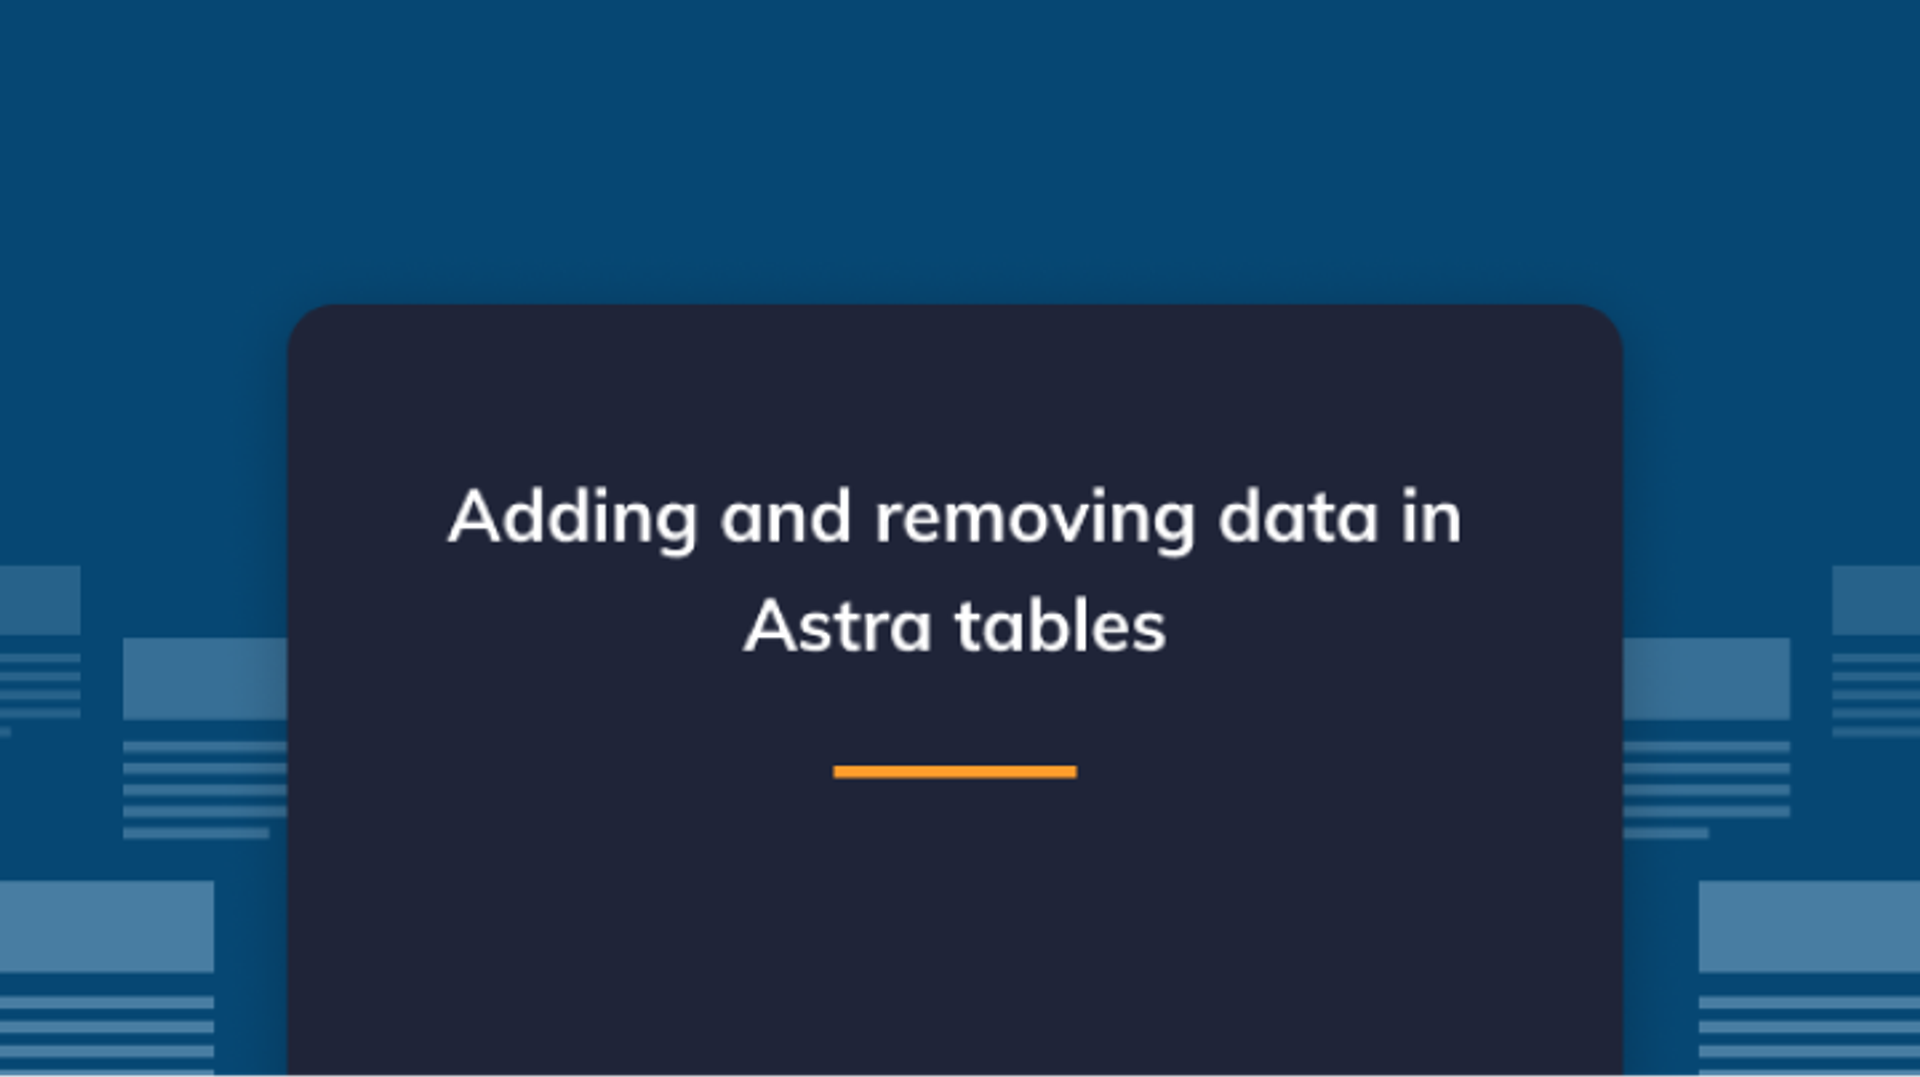 Astraテーブルでのデータの追加および削除